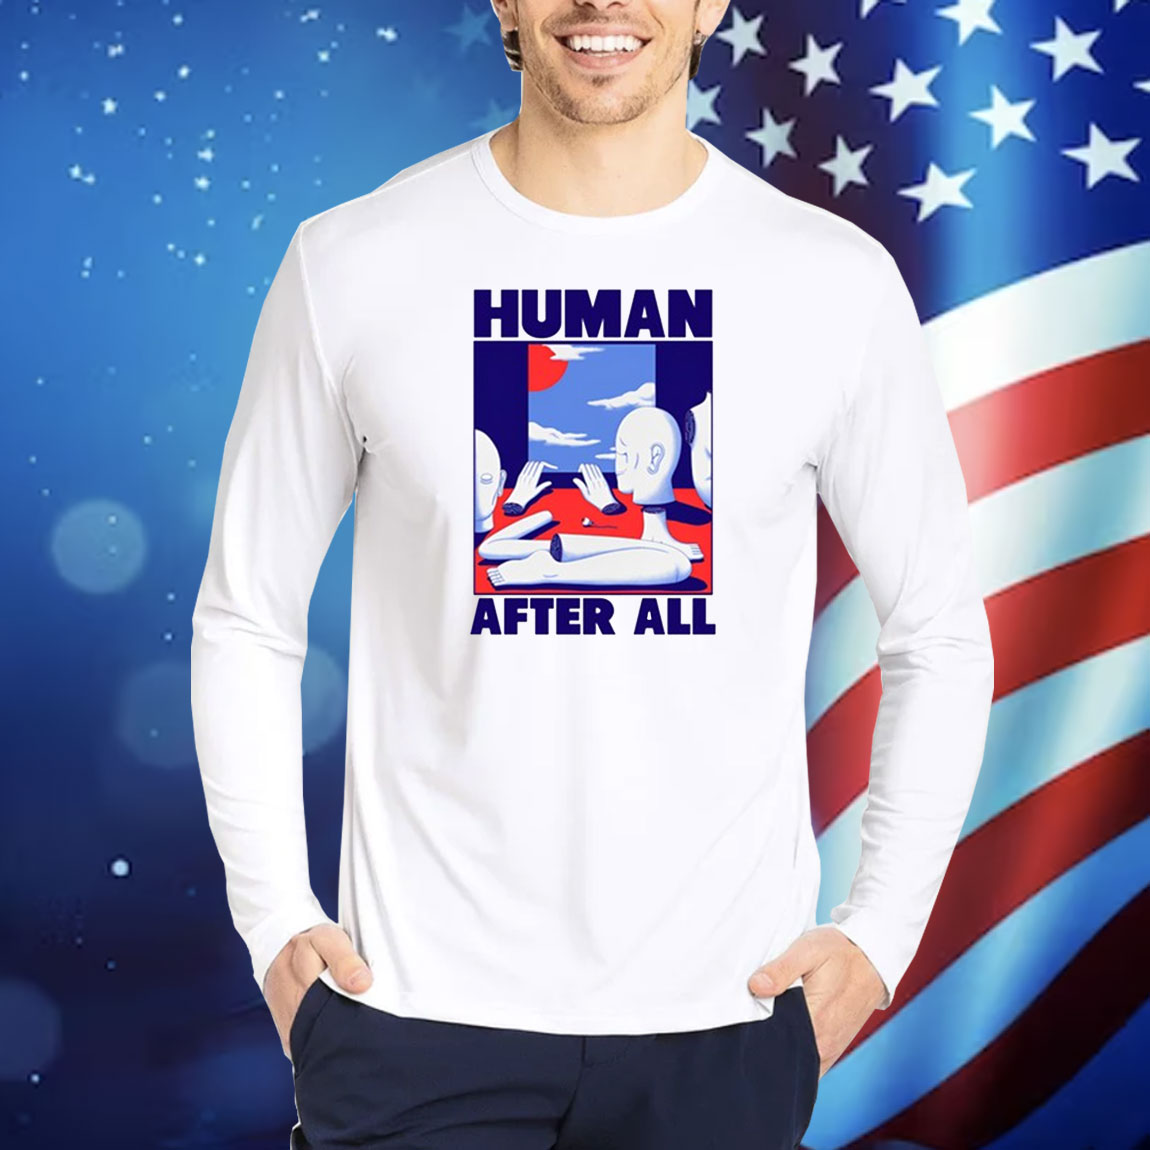 Human After All - Premium Box-Fit TShirts